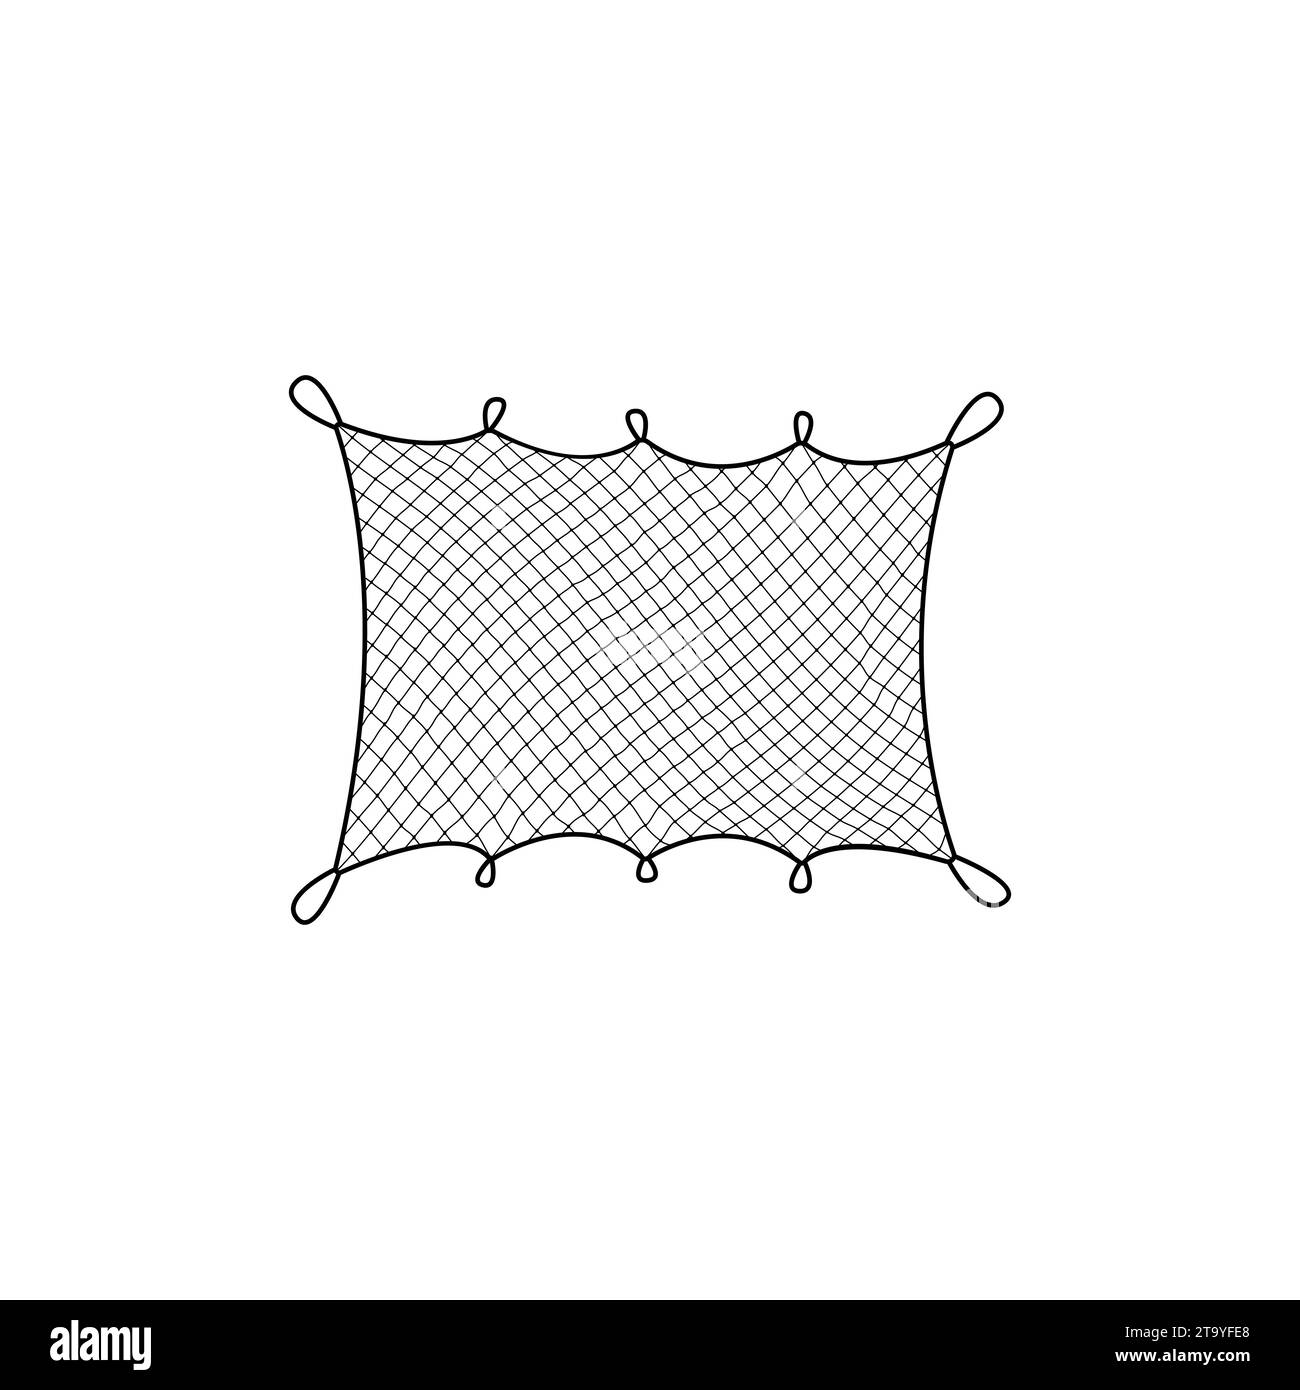 Fish net, fishnet or fishing scoop - vector clip art